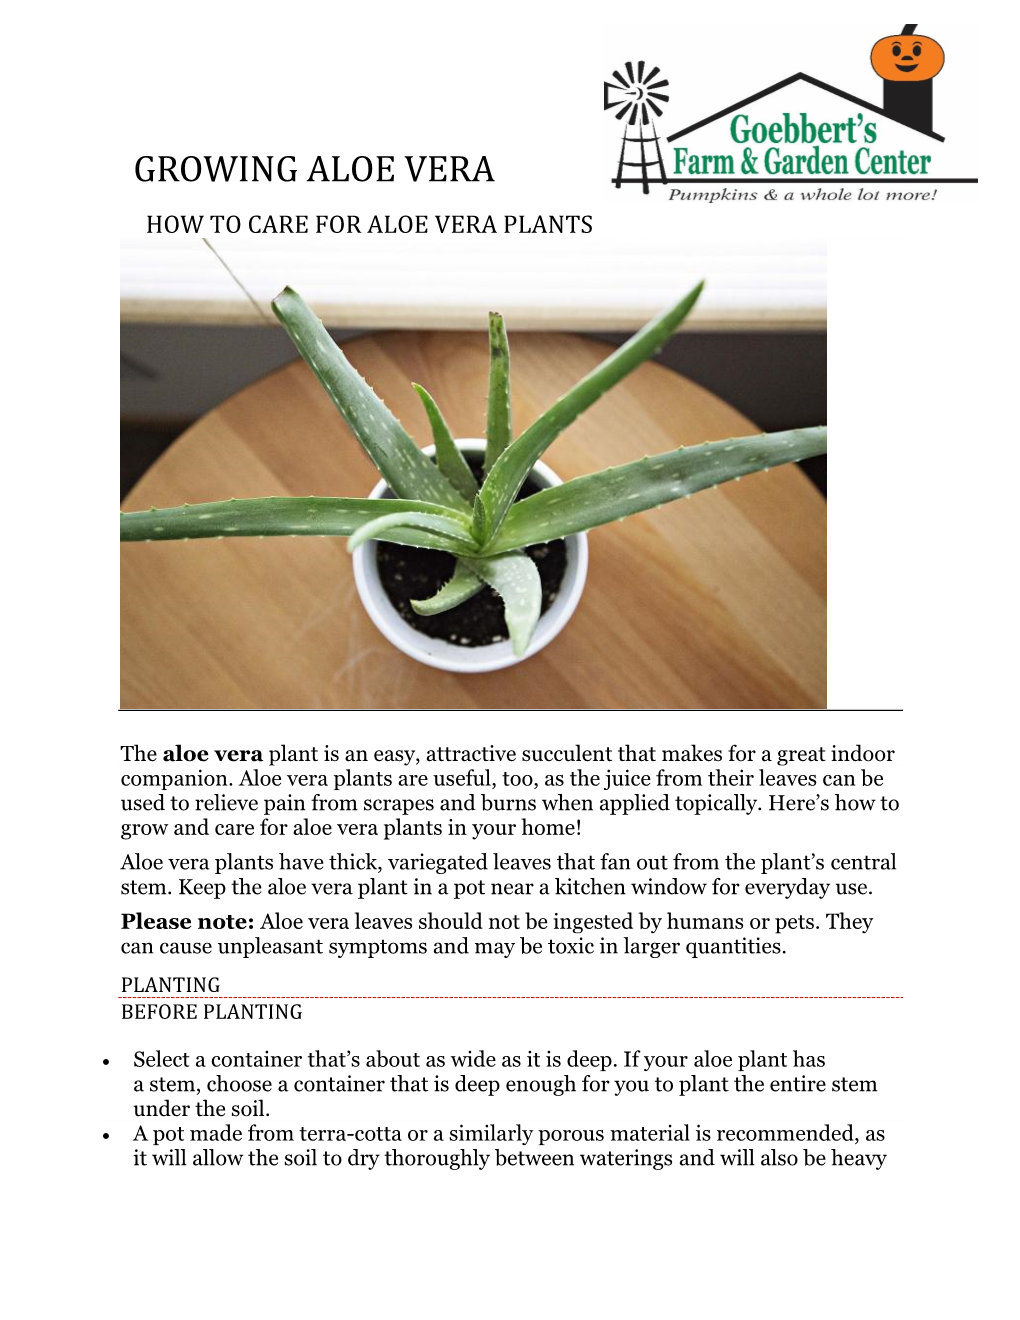 Growing Aloe Vera How to Care for Aloe Vera Plants